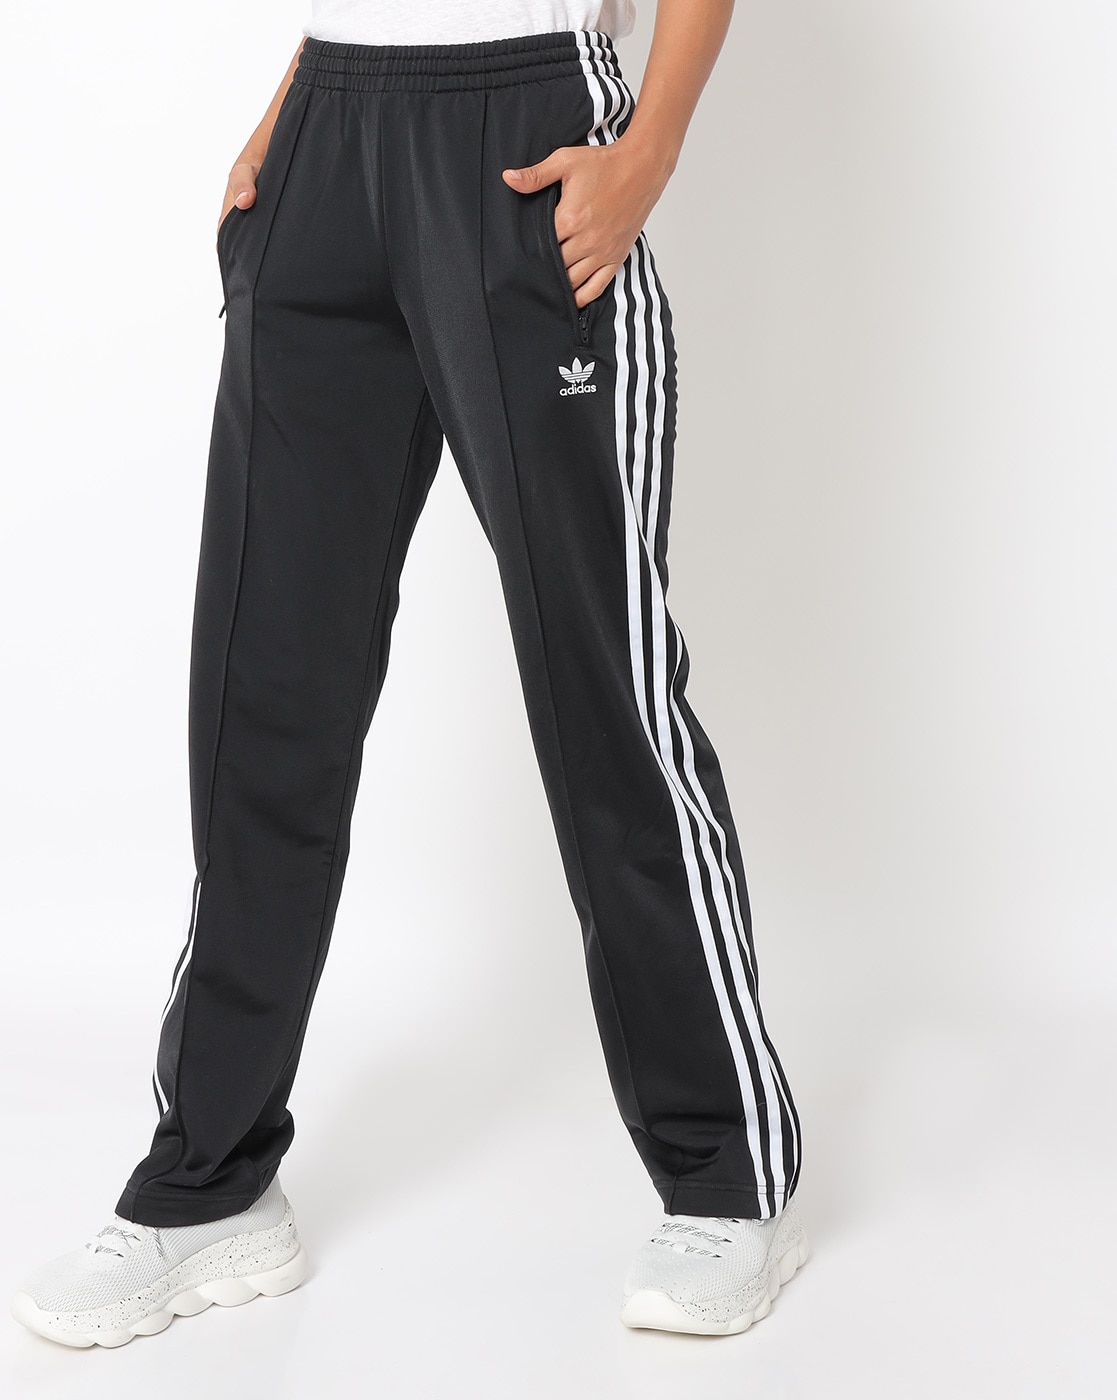 Adidas Original Track Pants Women's L | Track pants women, Pants for women,  Women